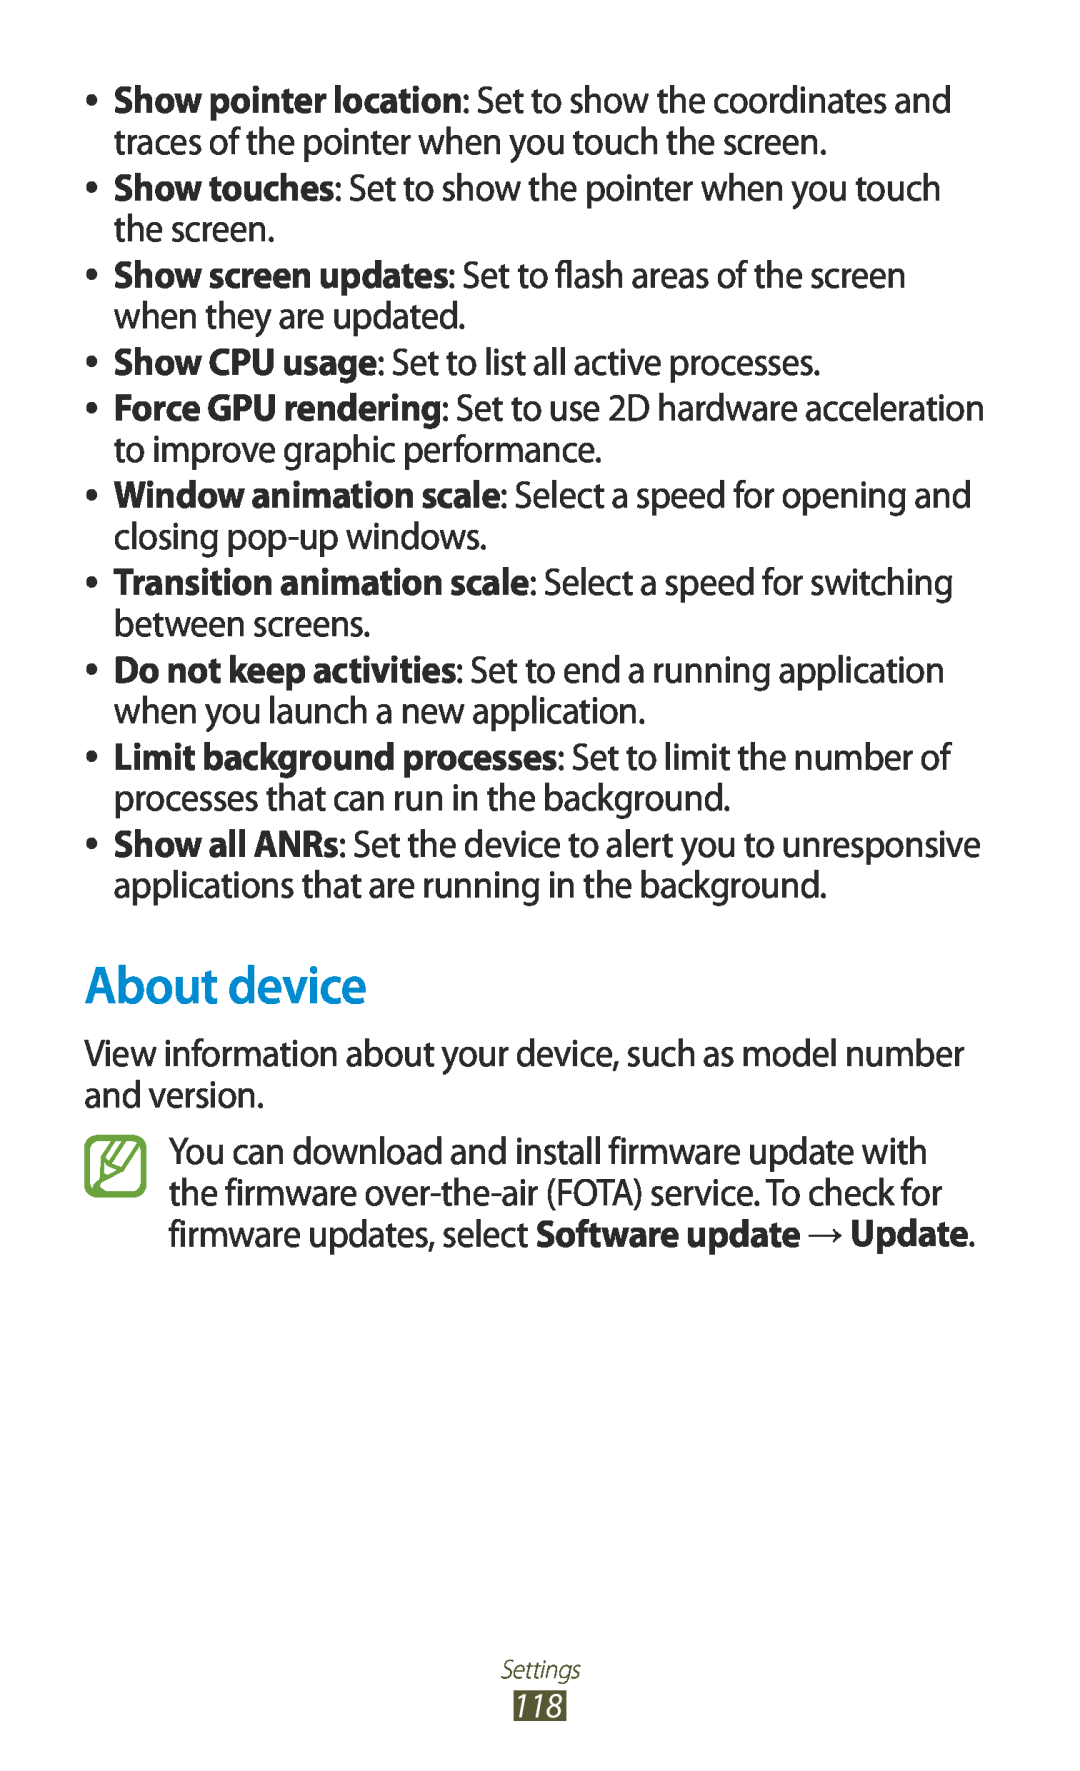 Samsung GT-P7500UWDXSK, GT-P7500UWEDBT, GT-P7500FKAATO, GT-P7500FKDVD2, GT-P7500ZWAATO, GT-P7500UWDDRE manual About device 